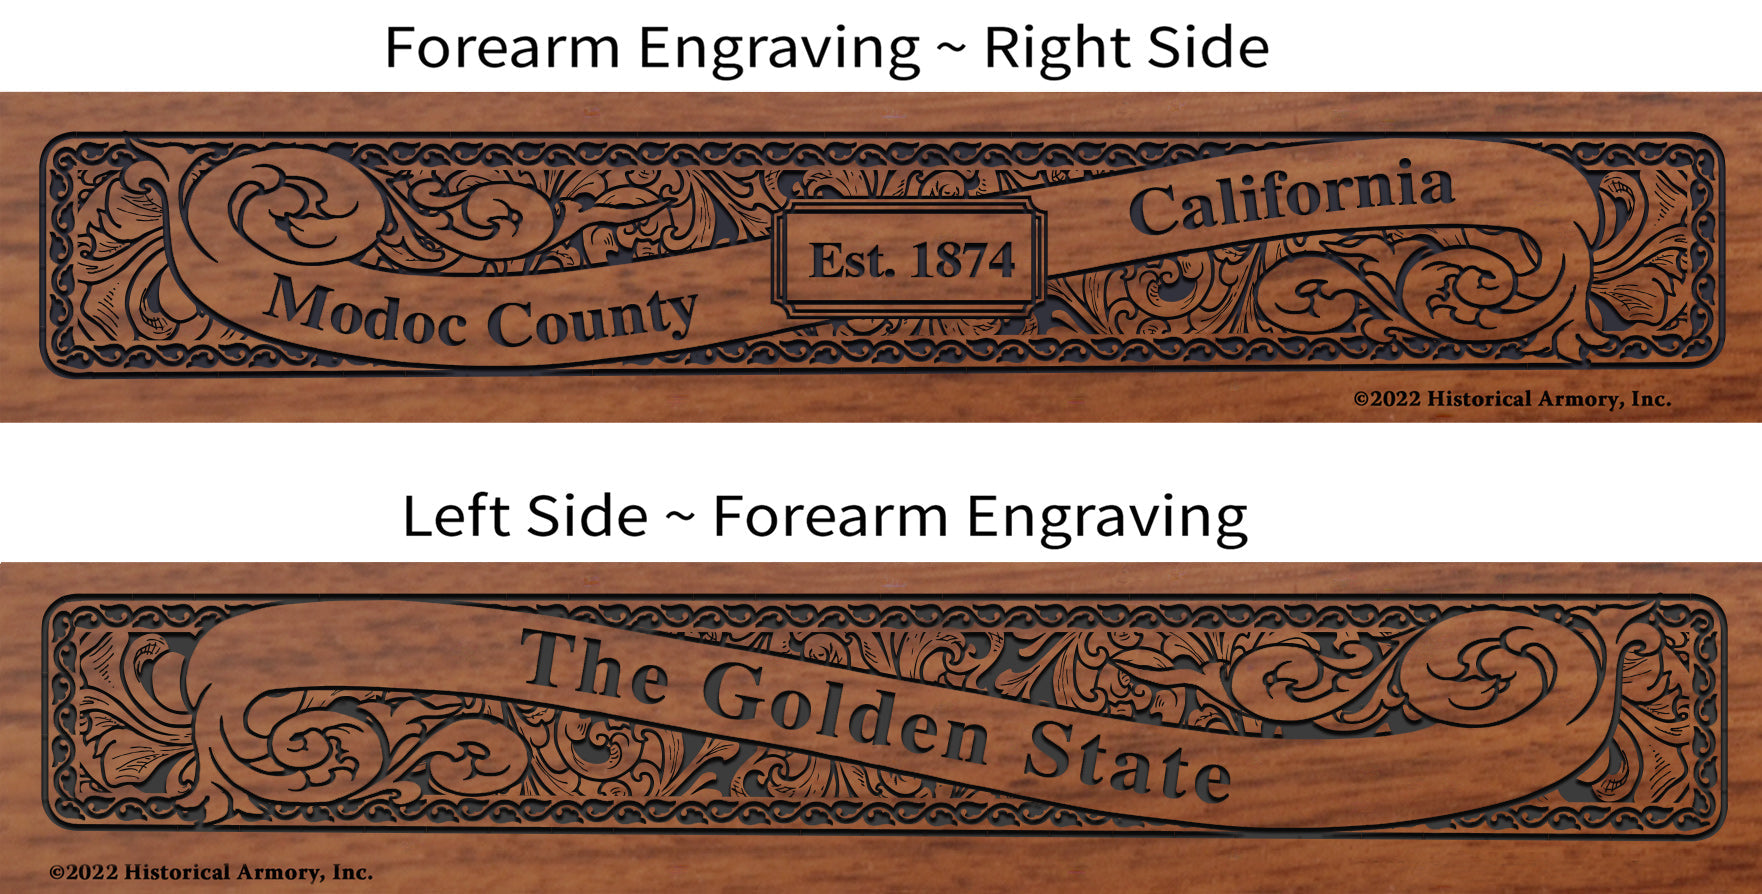 Modoc County California Engraved Rifle Forearm